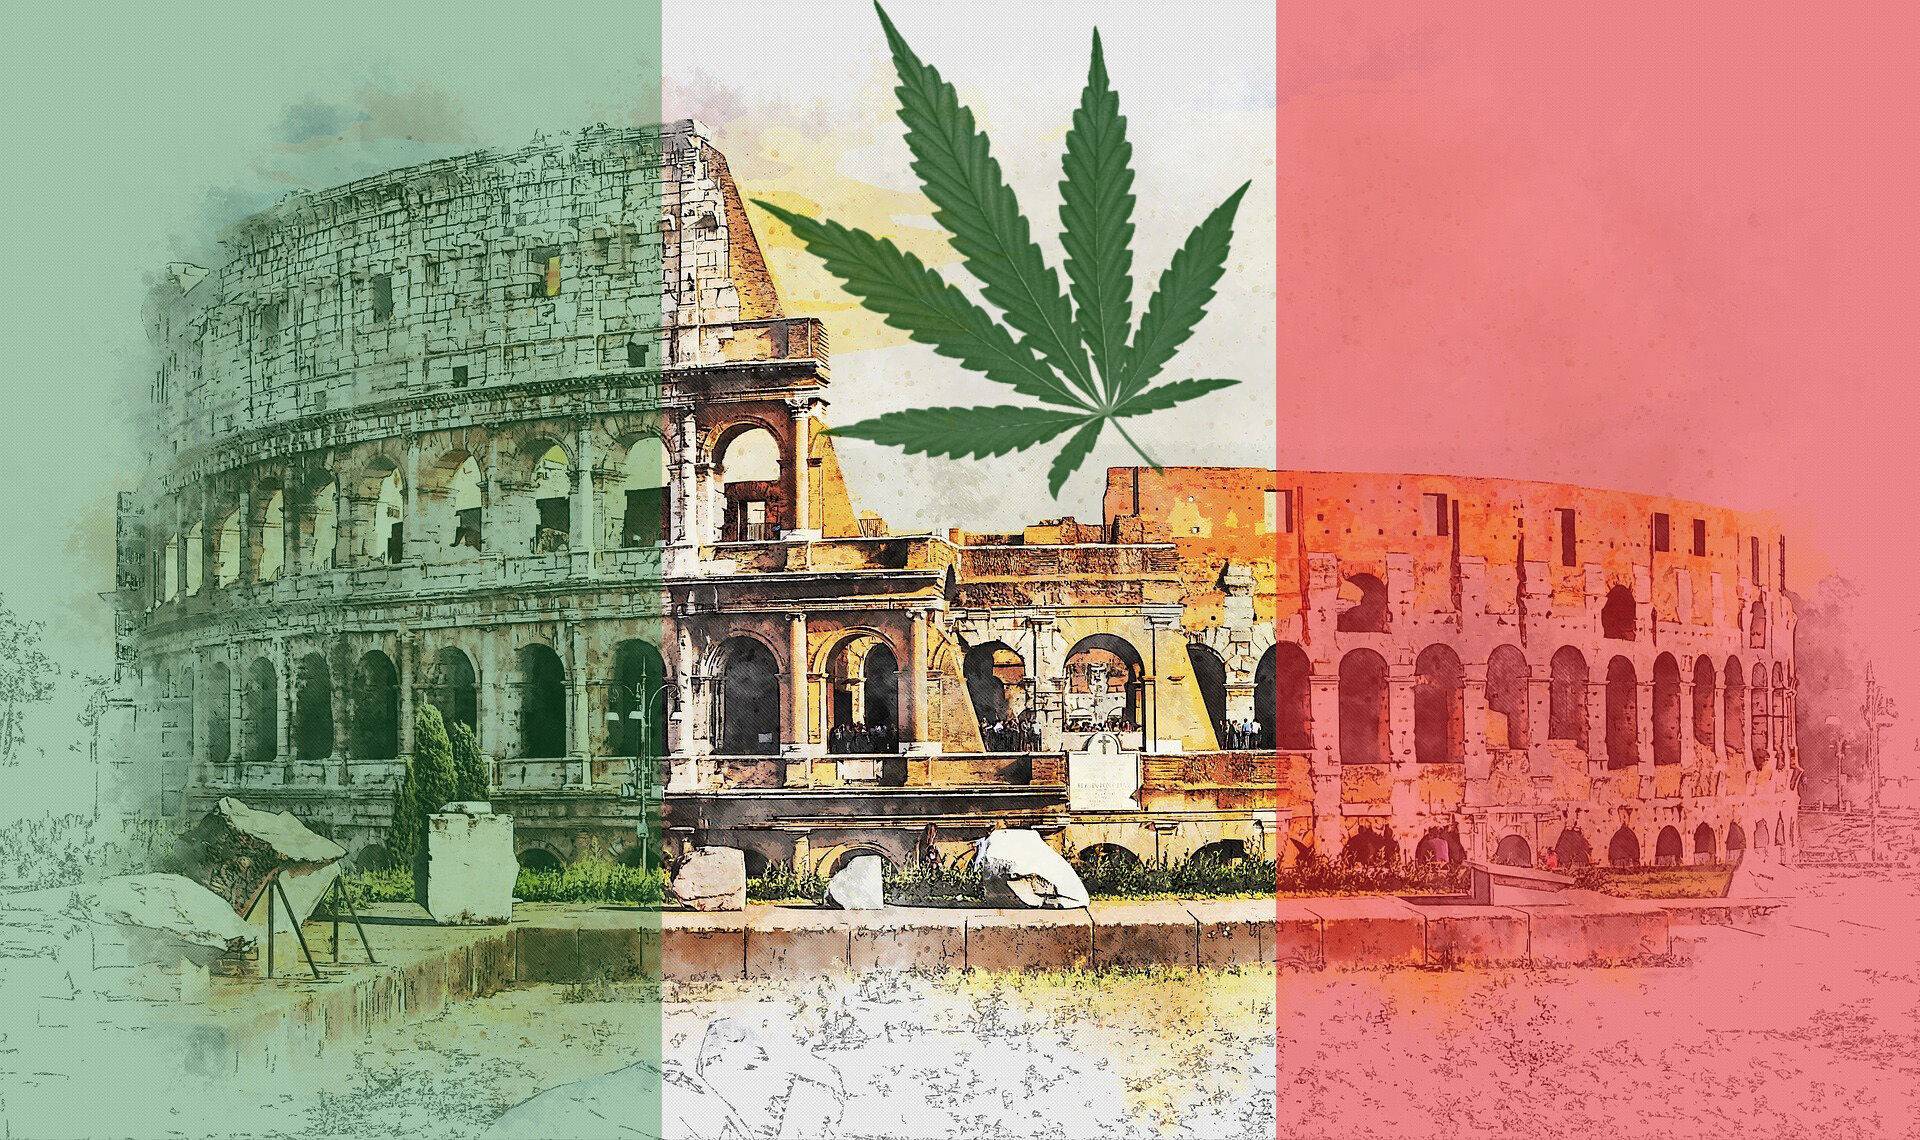 Italien legalisiert Marihuana